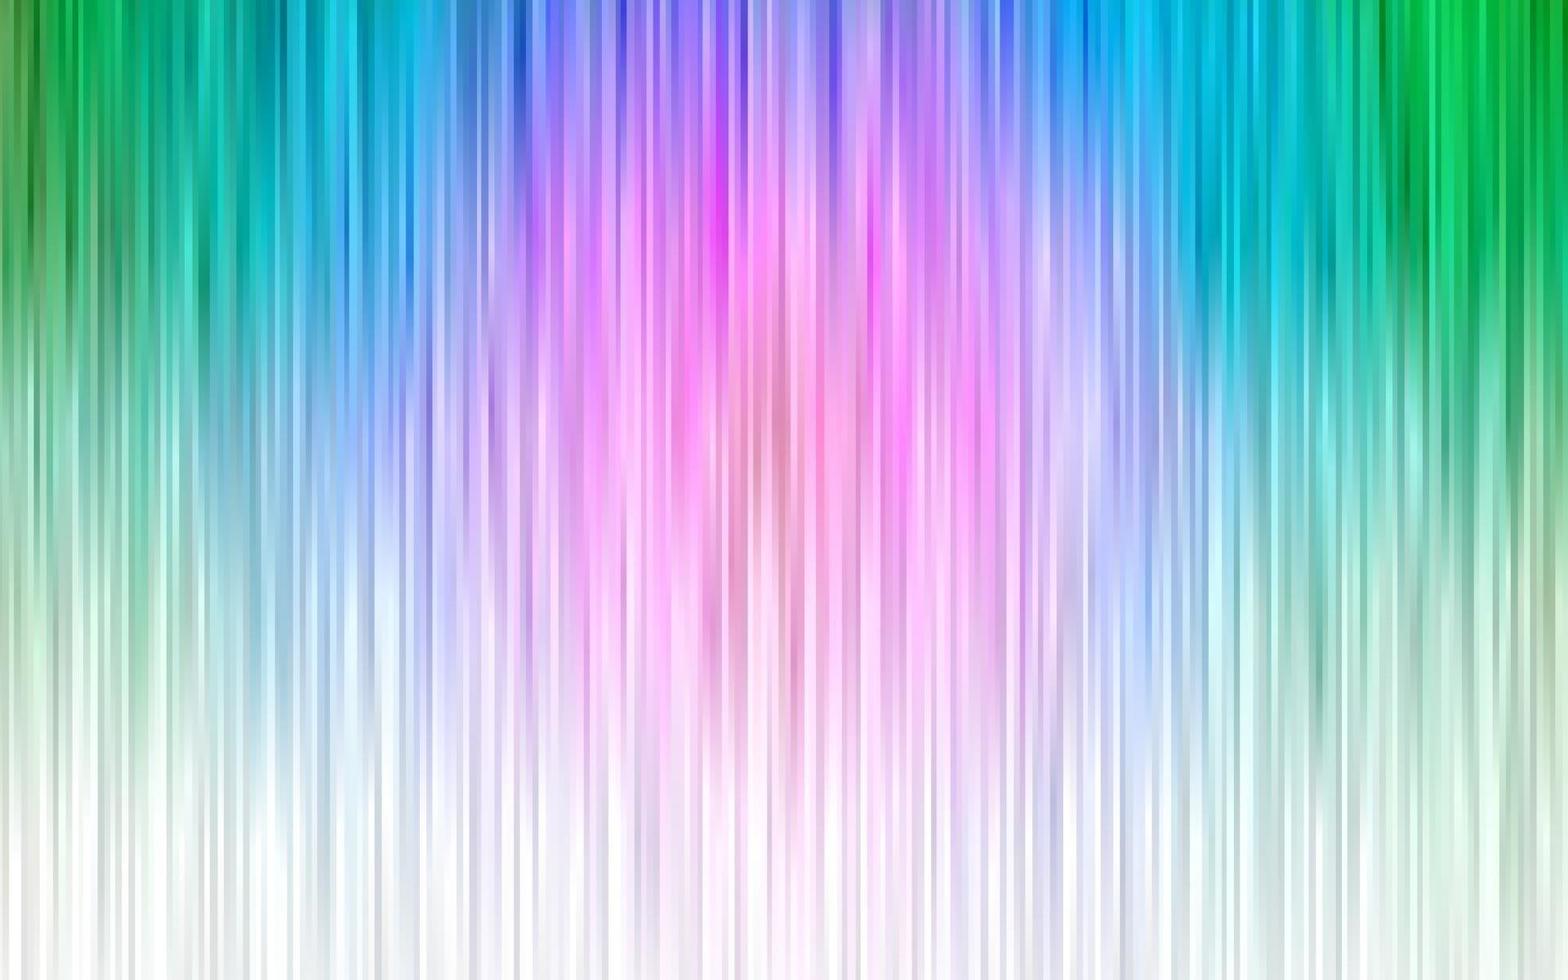 luz multicolor, layout de vetor de arco-íris com linhas planas.